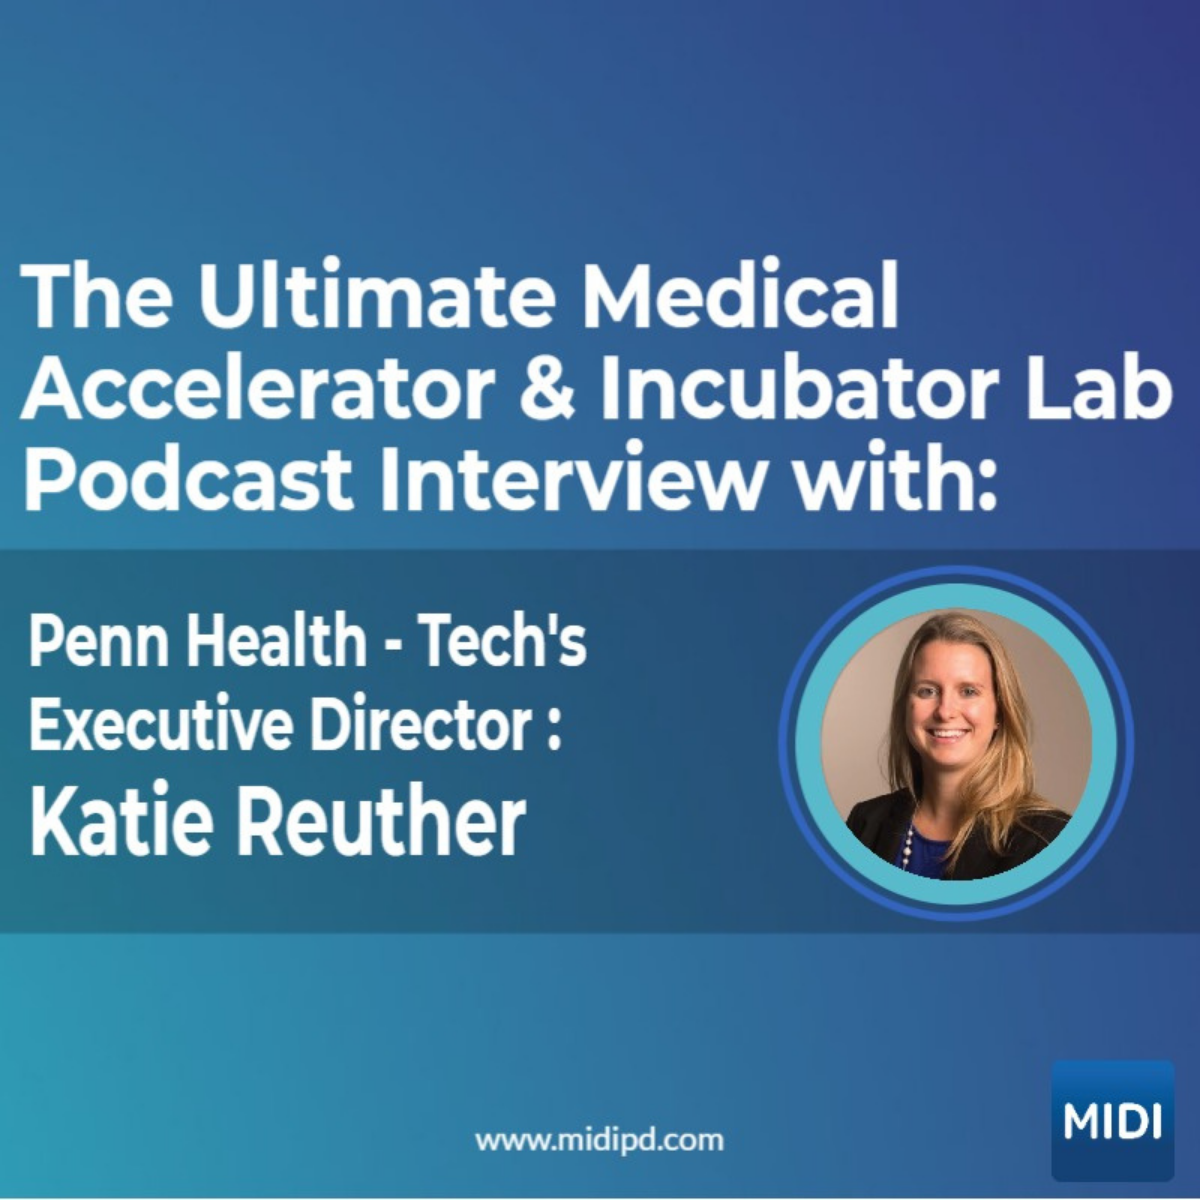 Penn Health-Tech: Connecting Health-Tech Innovators across Penn’s Resource Ecosystem}